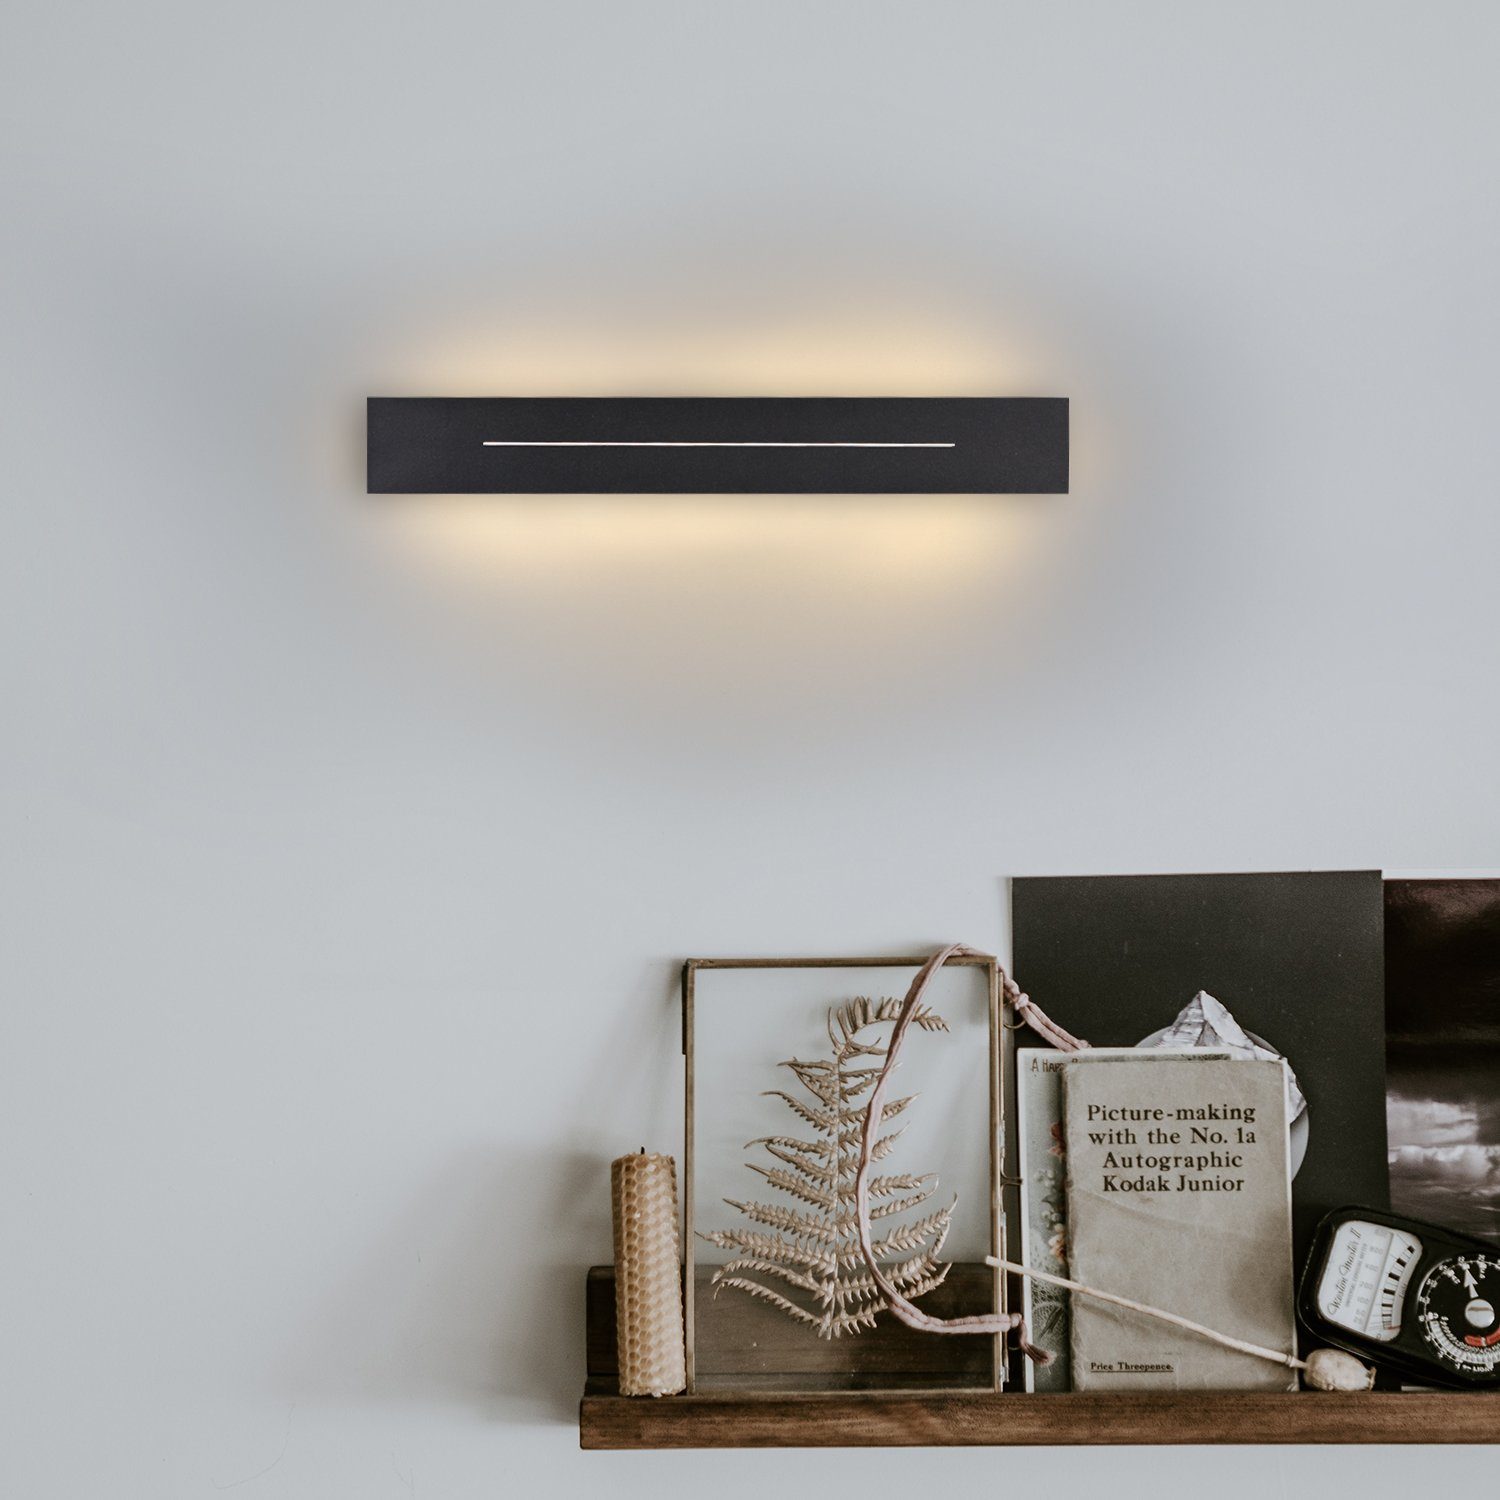 Wandleuchte warmweiß, 100cm, weiß/schwarz LED ZMH innen fest 60cm LED 30cm 30cm integriert, Wandlampe Schwarz